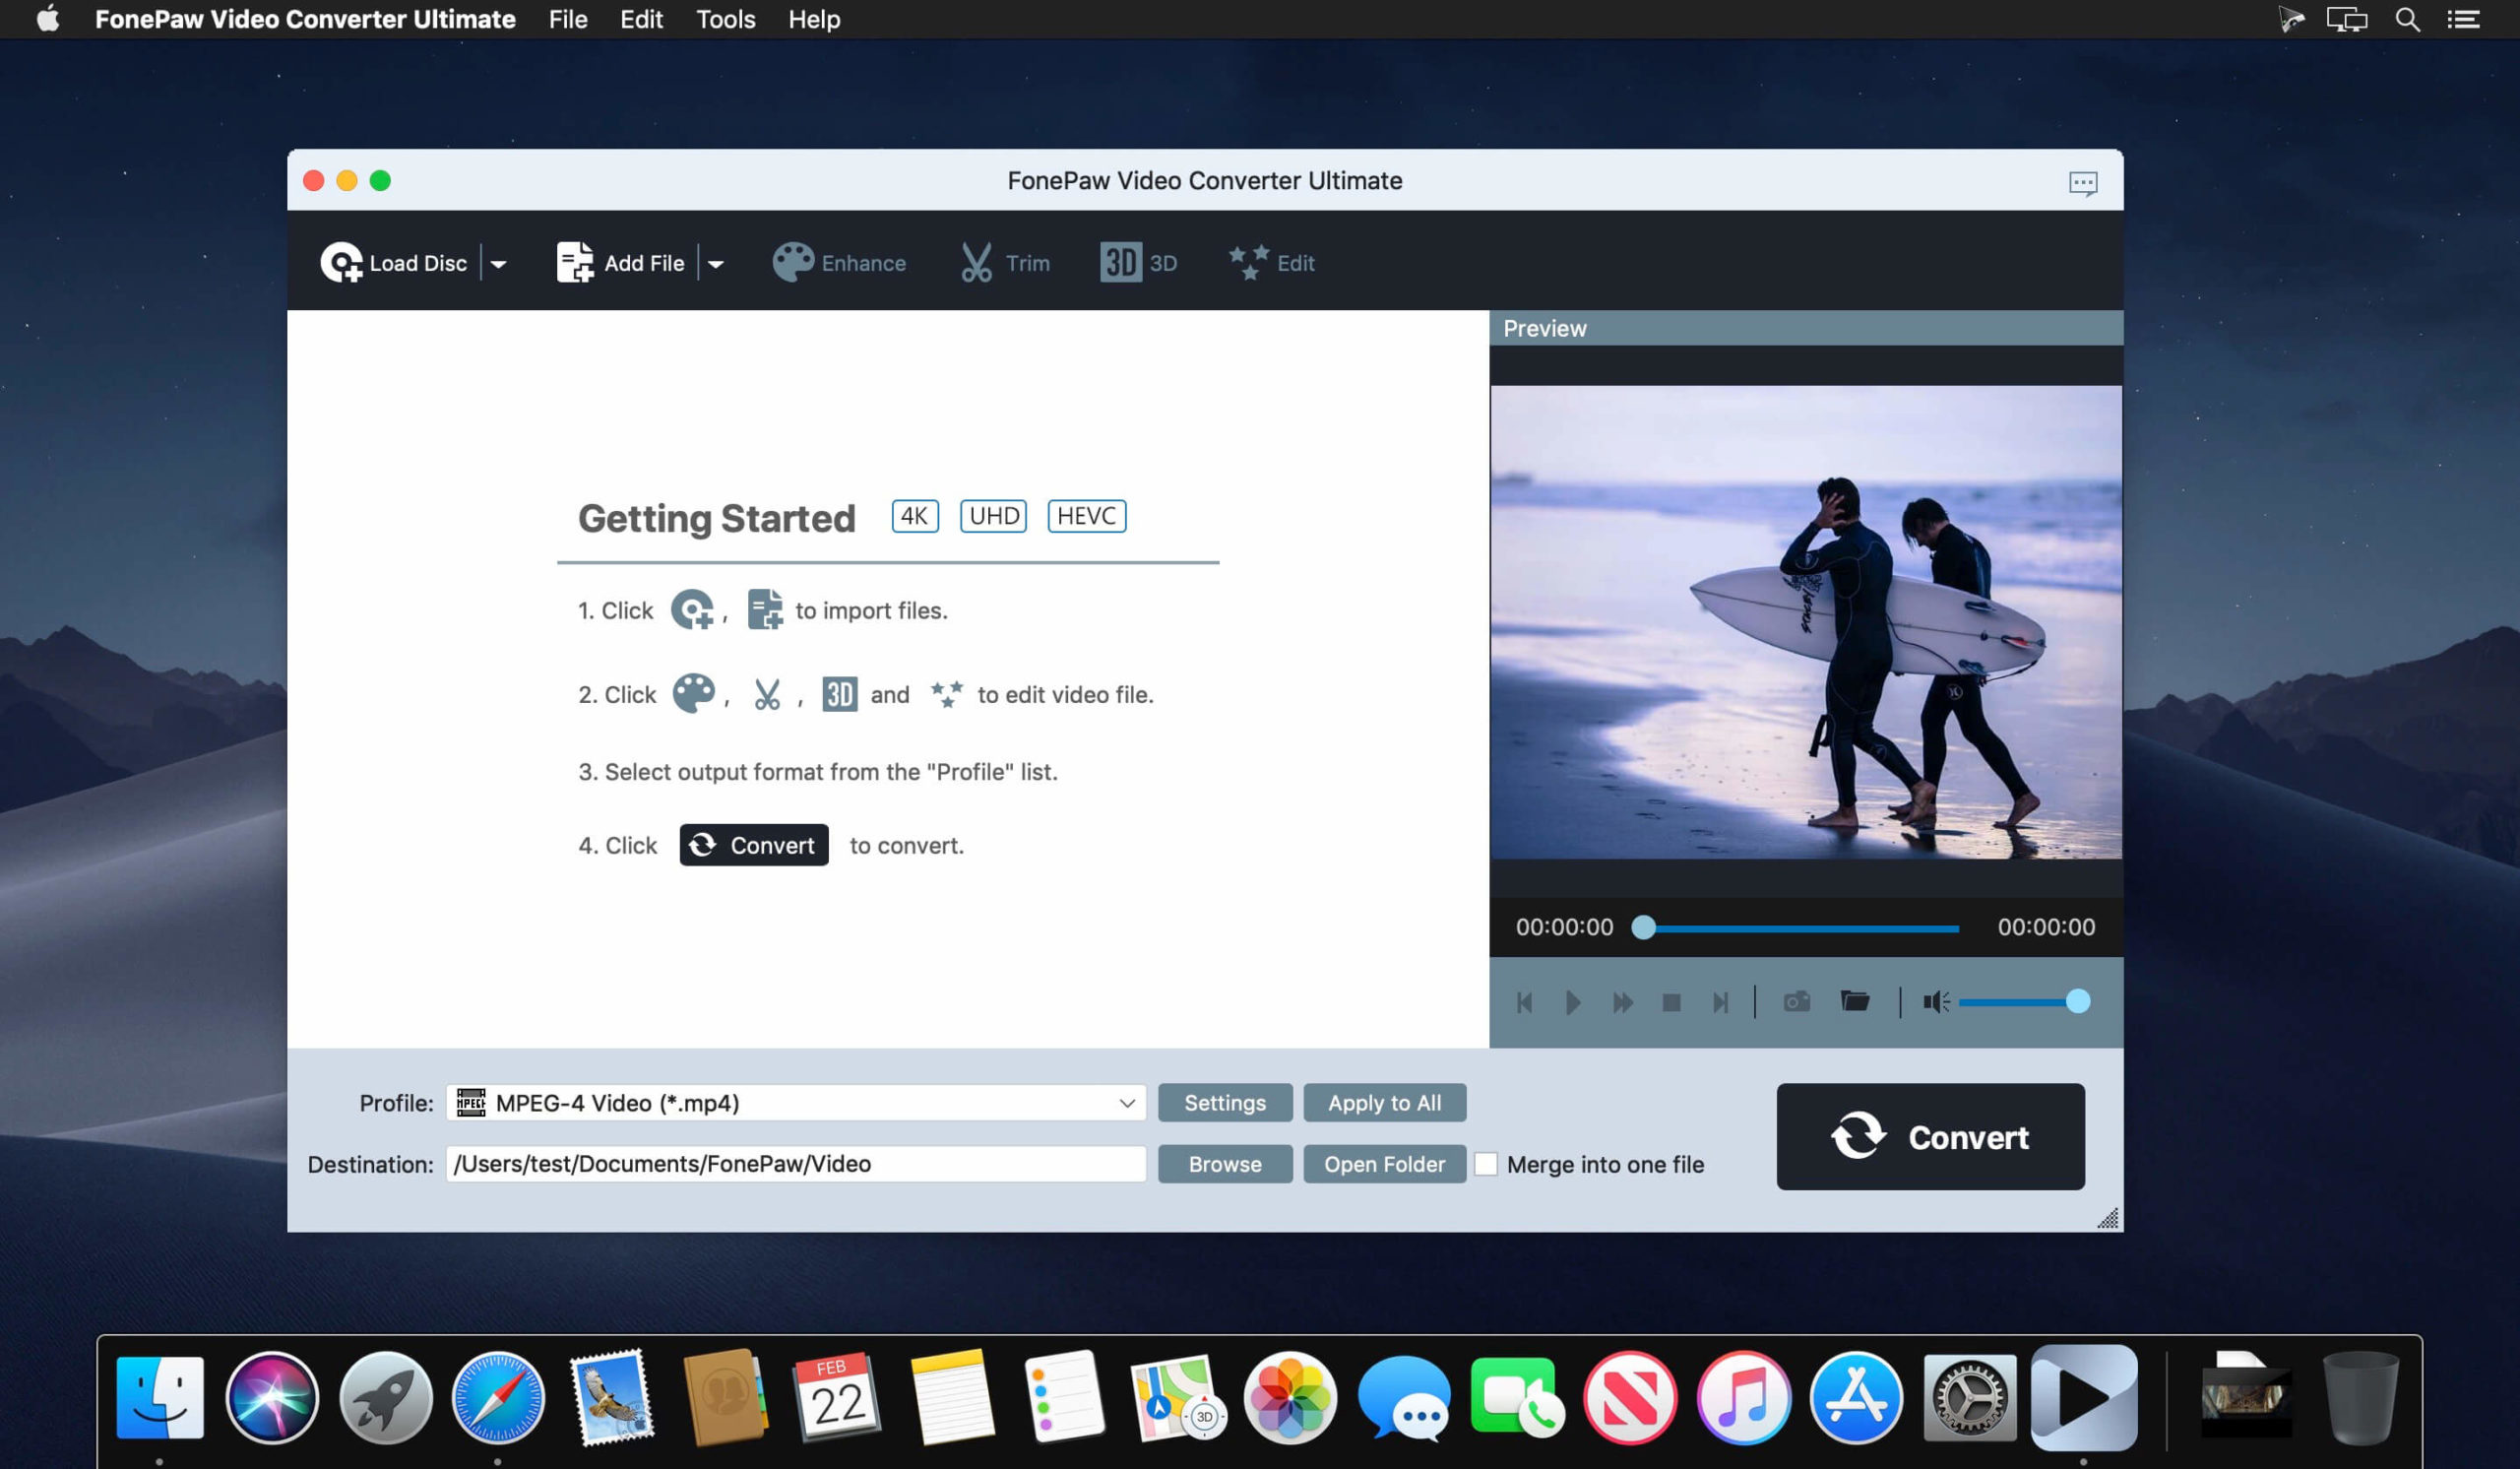 FonePaw Video Converter Ultimate 8.2 instaling